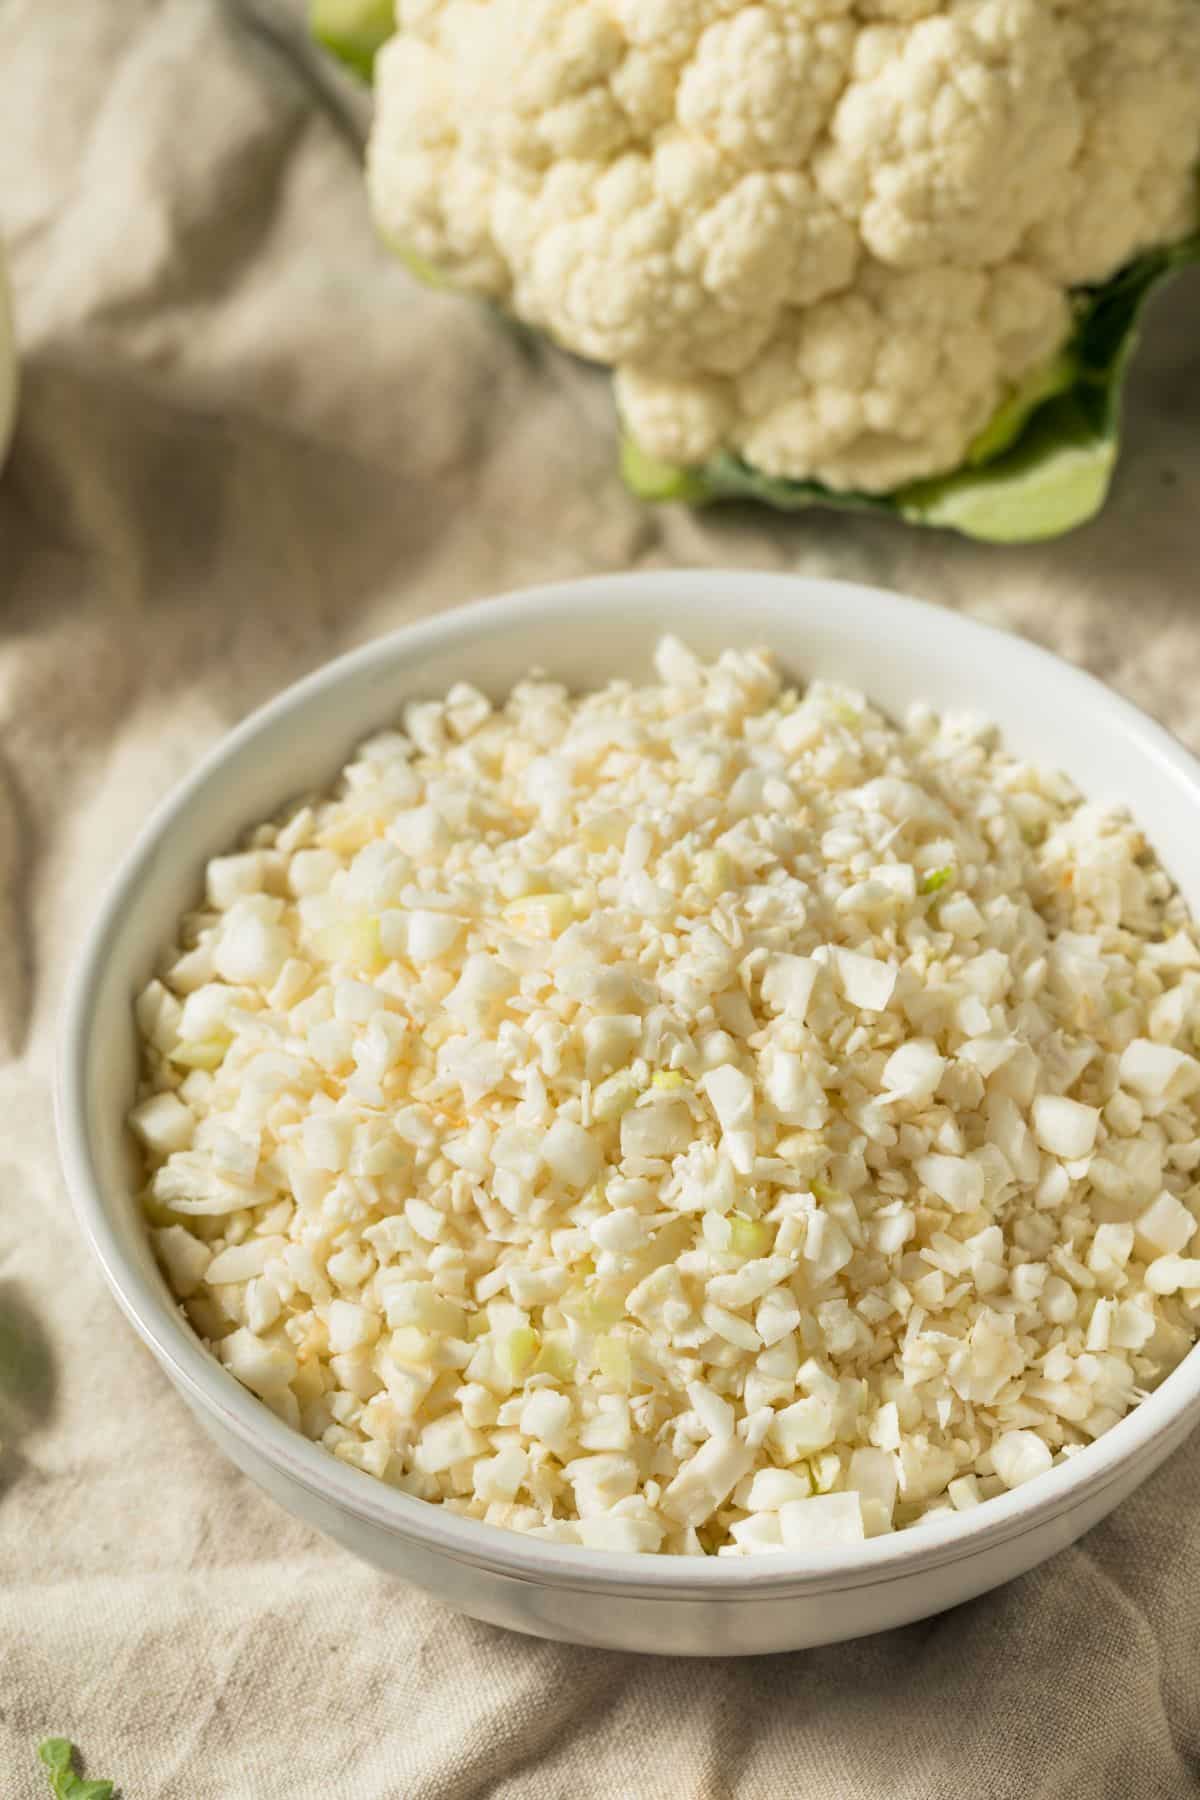 a bowl of riced cauliflower.